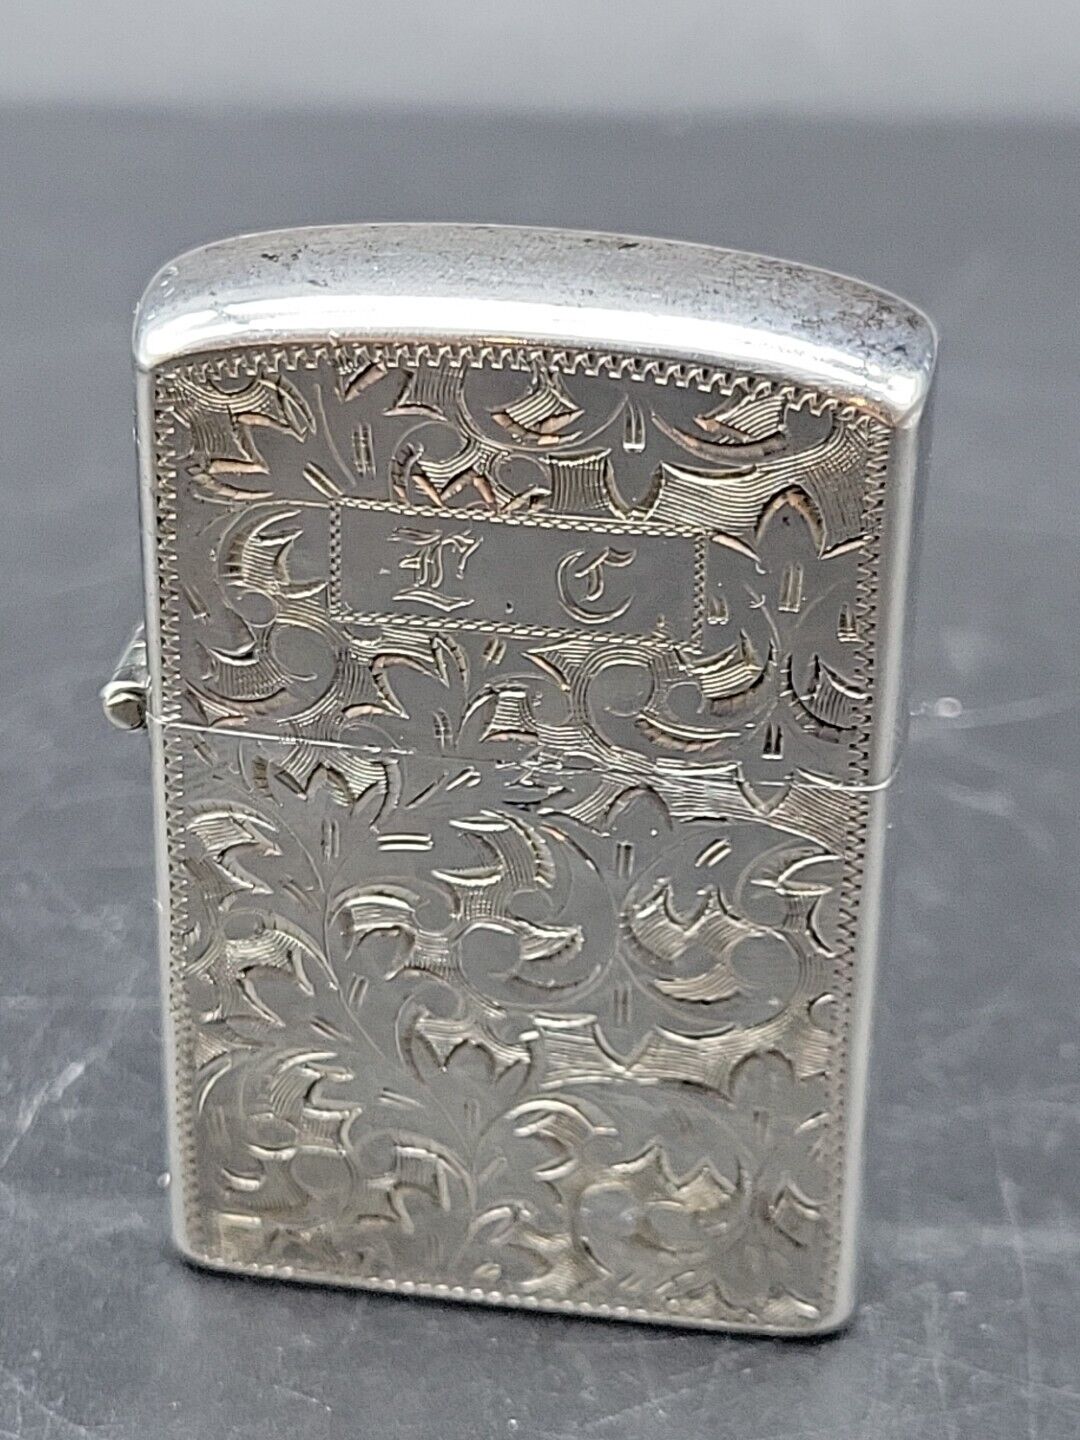 Vintage Etched Zippo Lighter 950 Sterling Silver